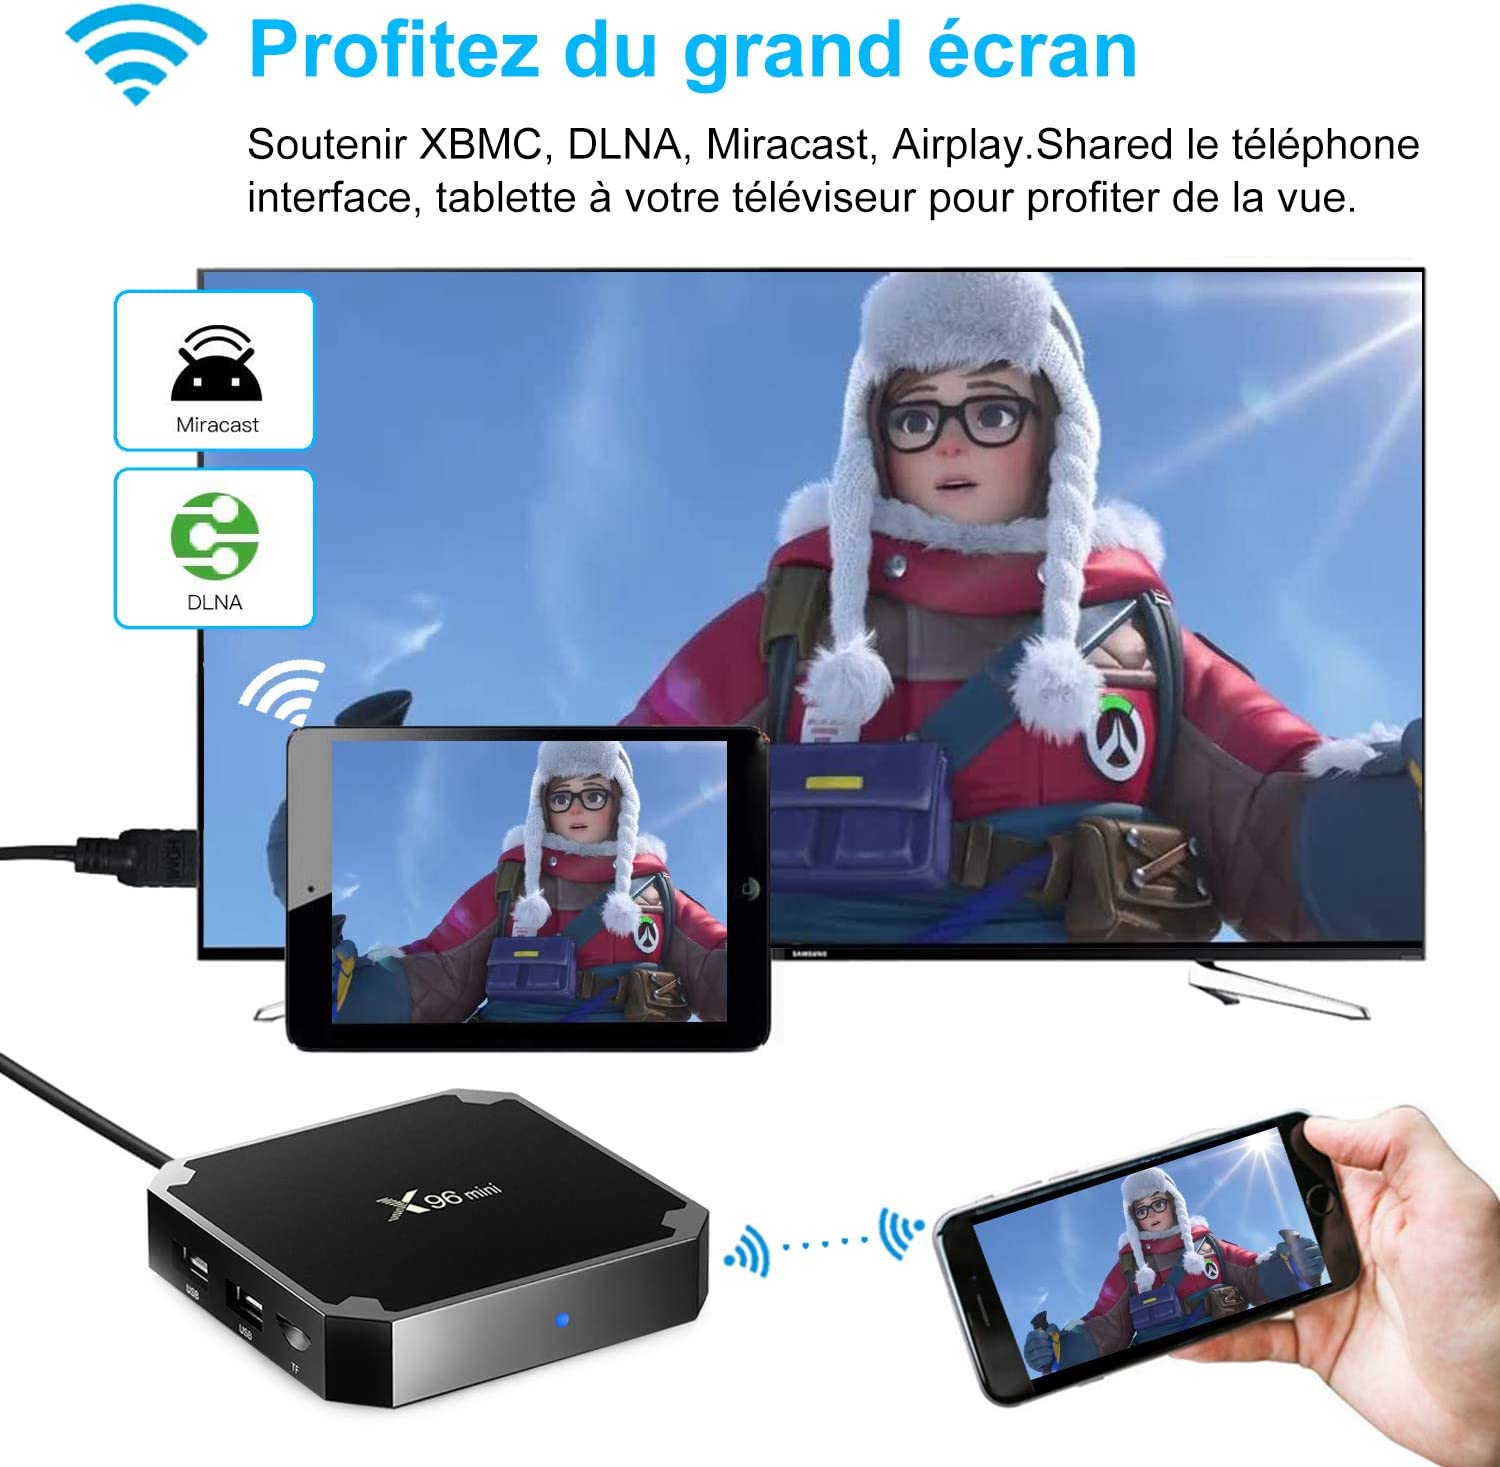 X96 Mini TV Box Android 9.0 Quad Core Dual Wifi 1080P 4K Support Media  Player 